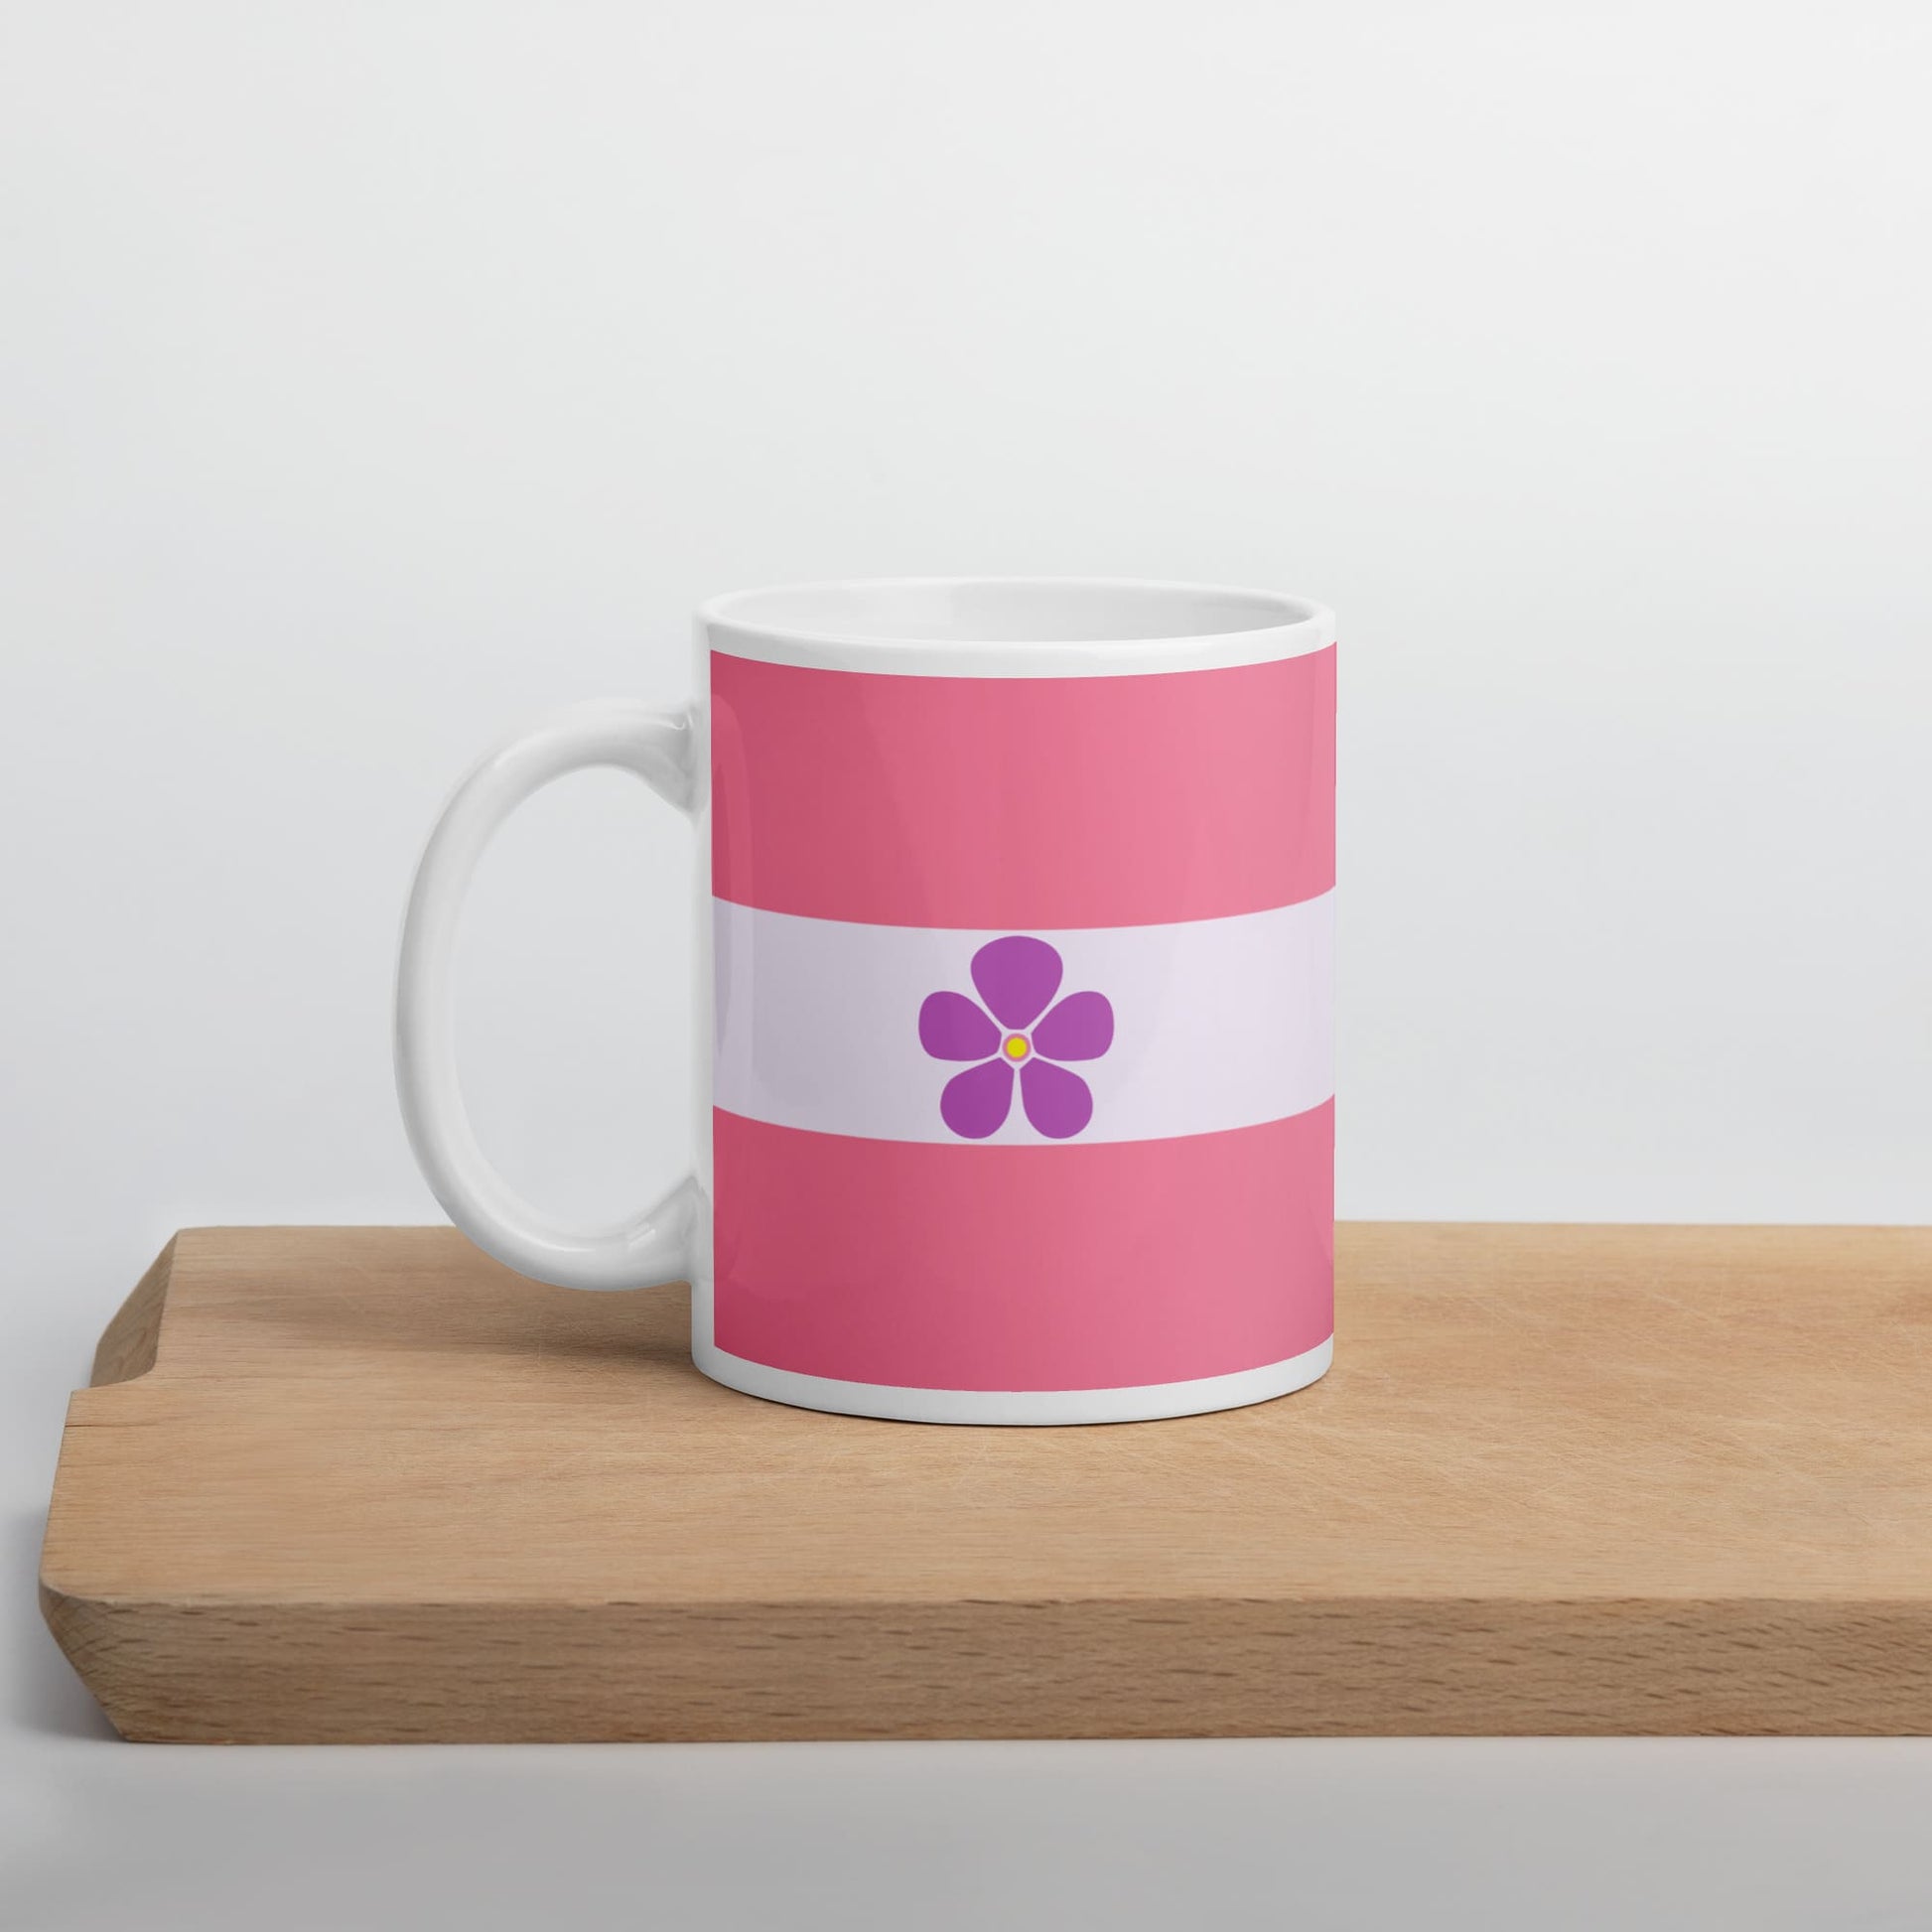 sapphic coffee mug on table